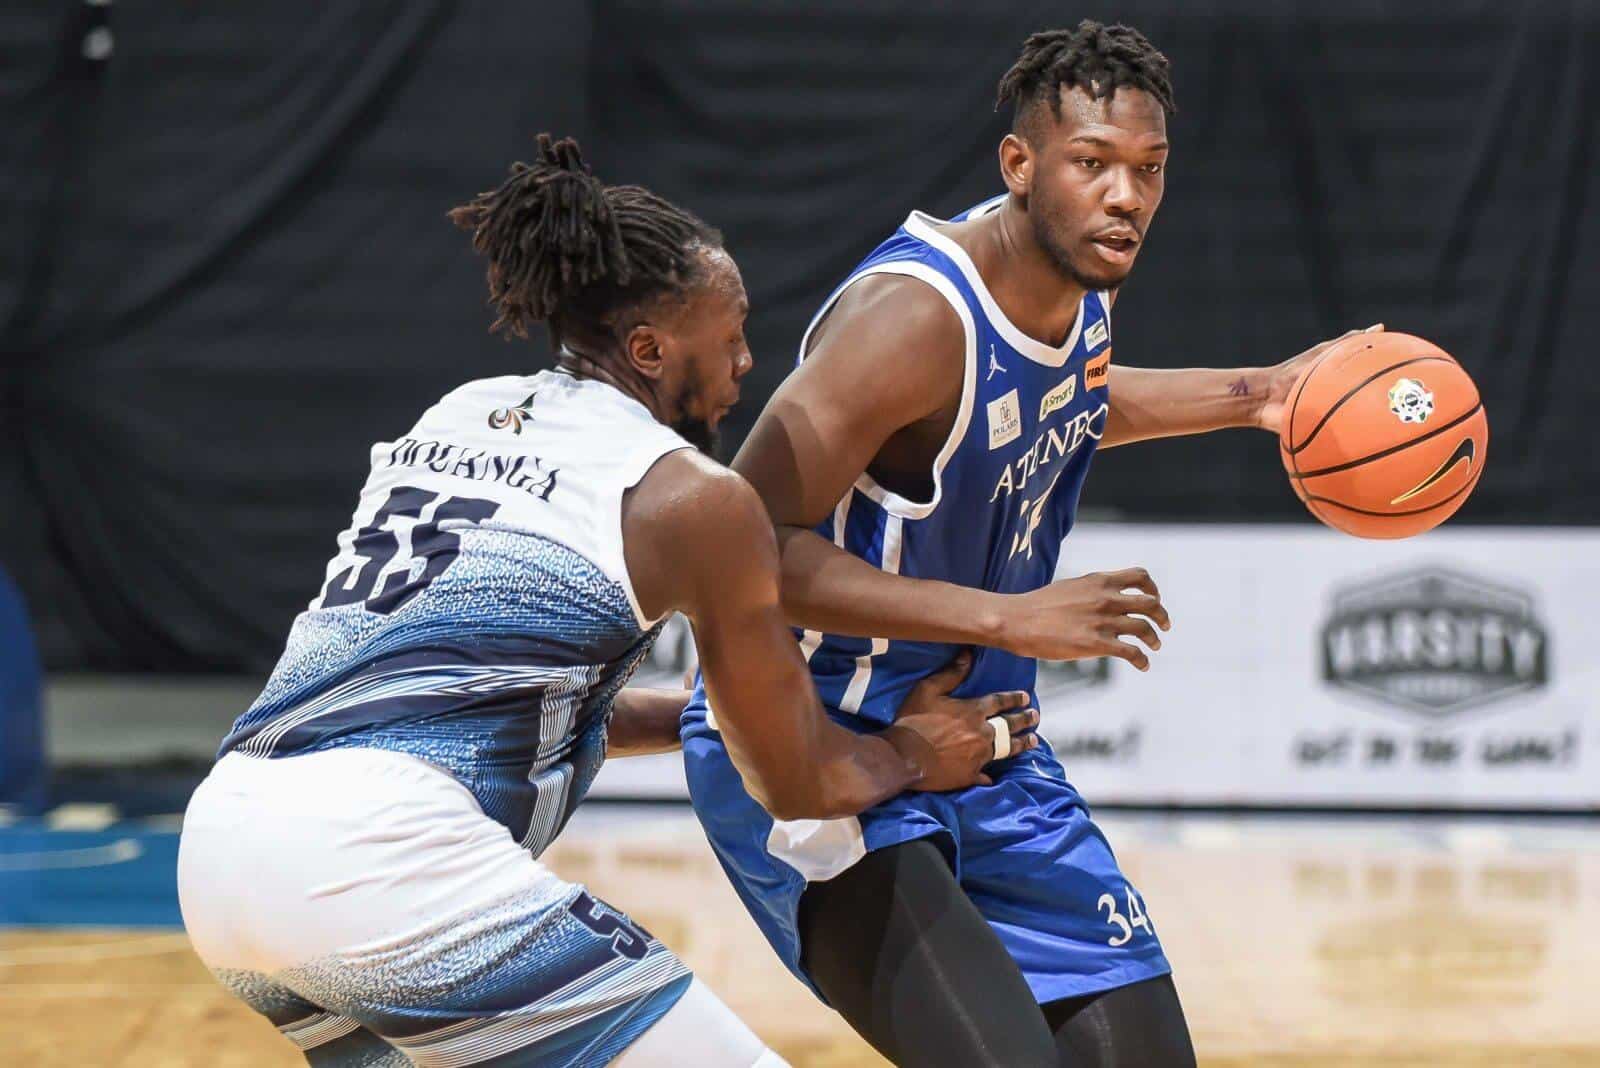 Ateneo Blue Eagles and La Salle notch wins in UAAP men’s basketball.